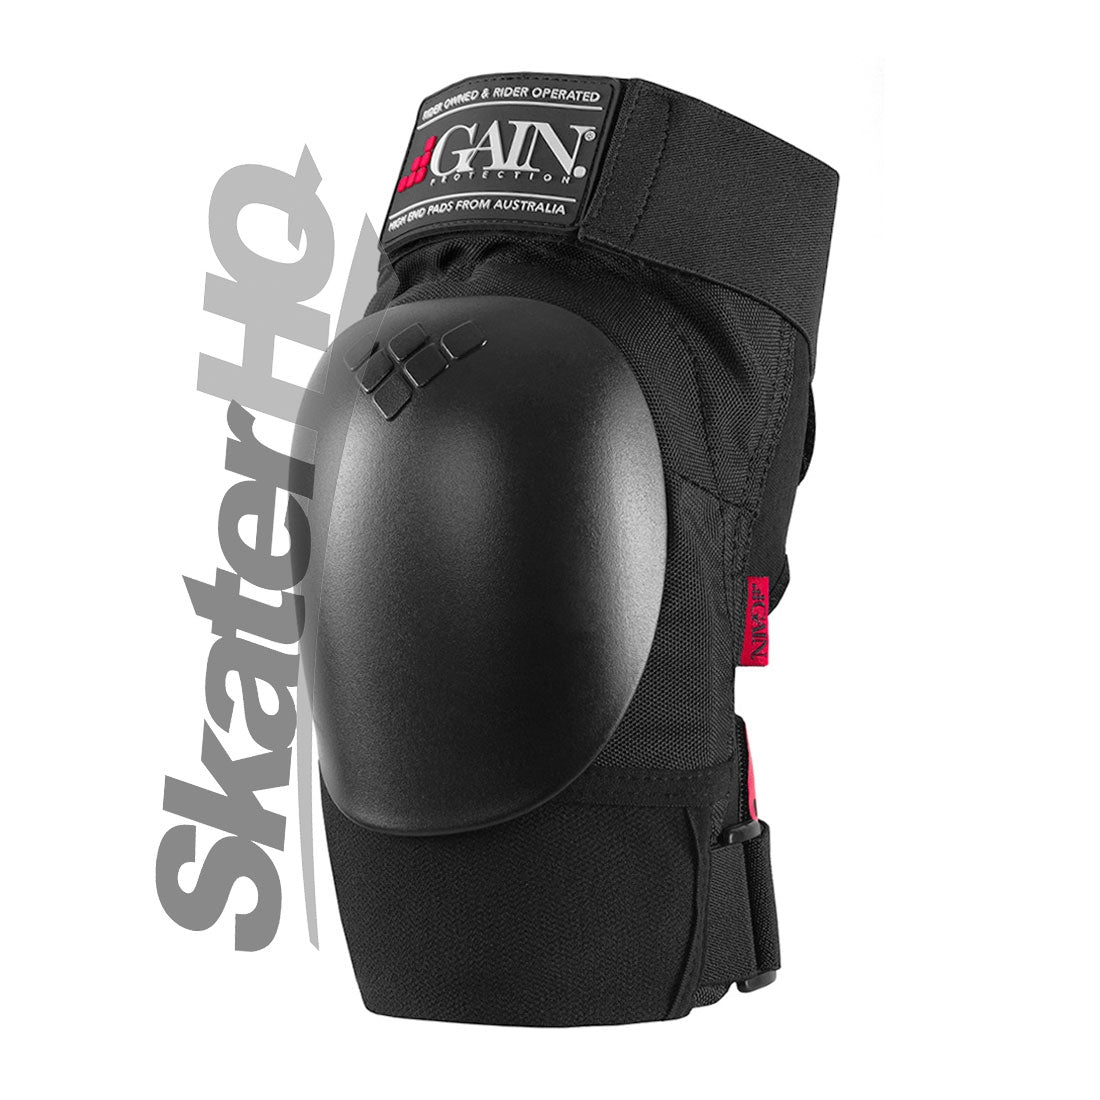 GAIN Shield Knee Pads - Black - XL Protective Gear